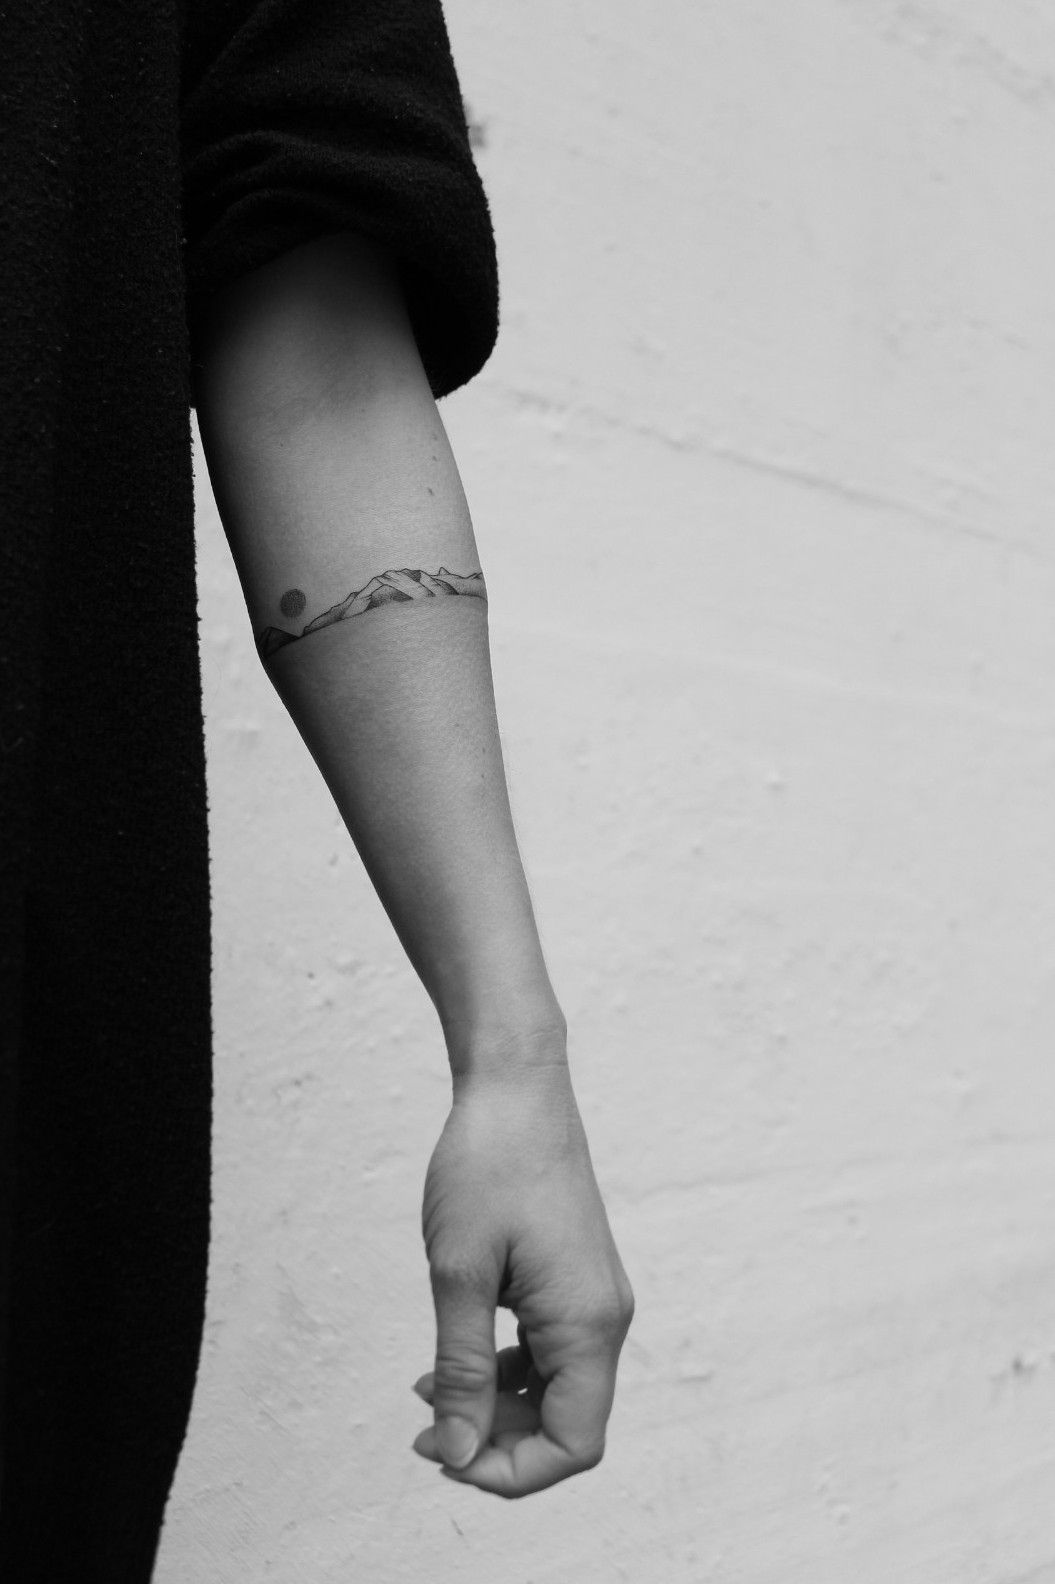 130 Amazing Armband Tattoo Designs